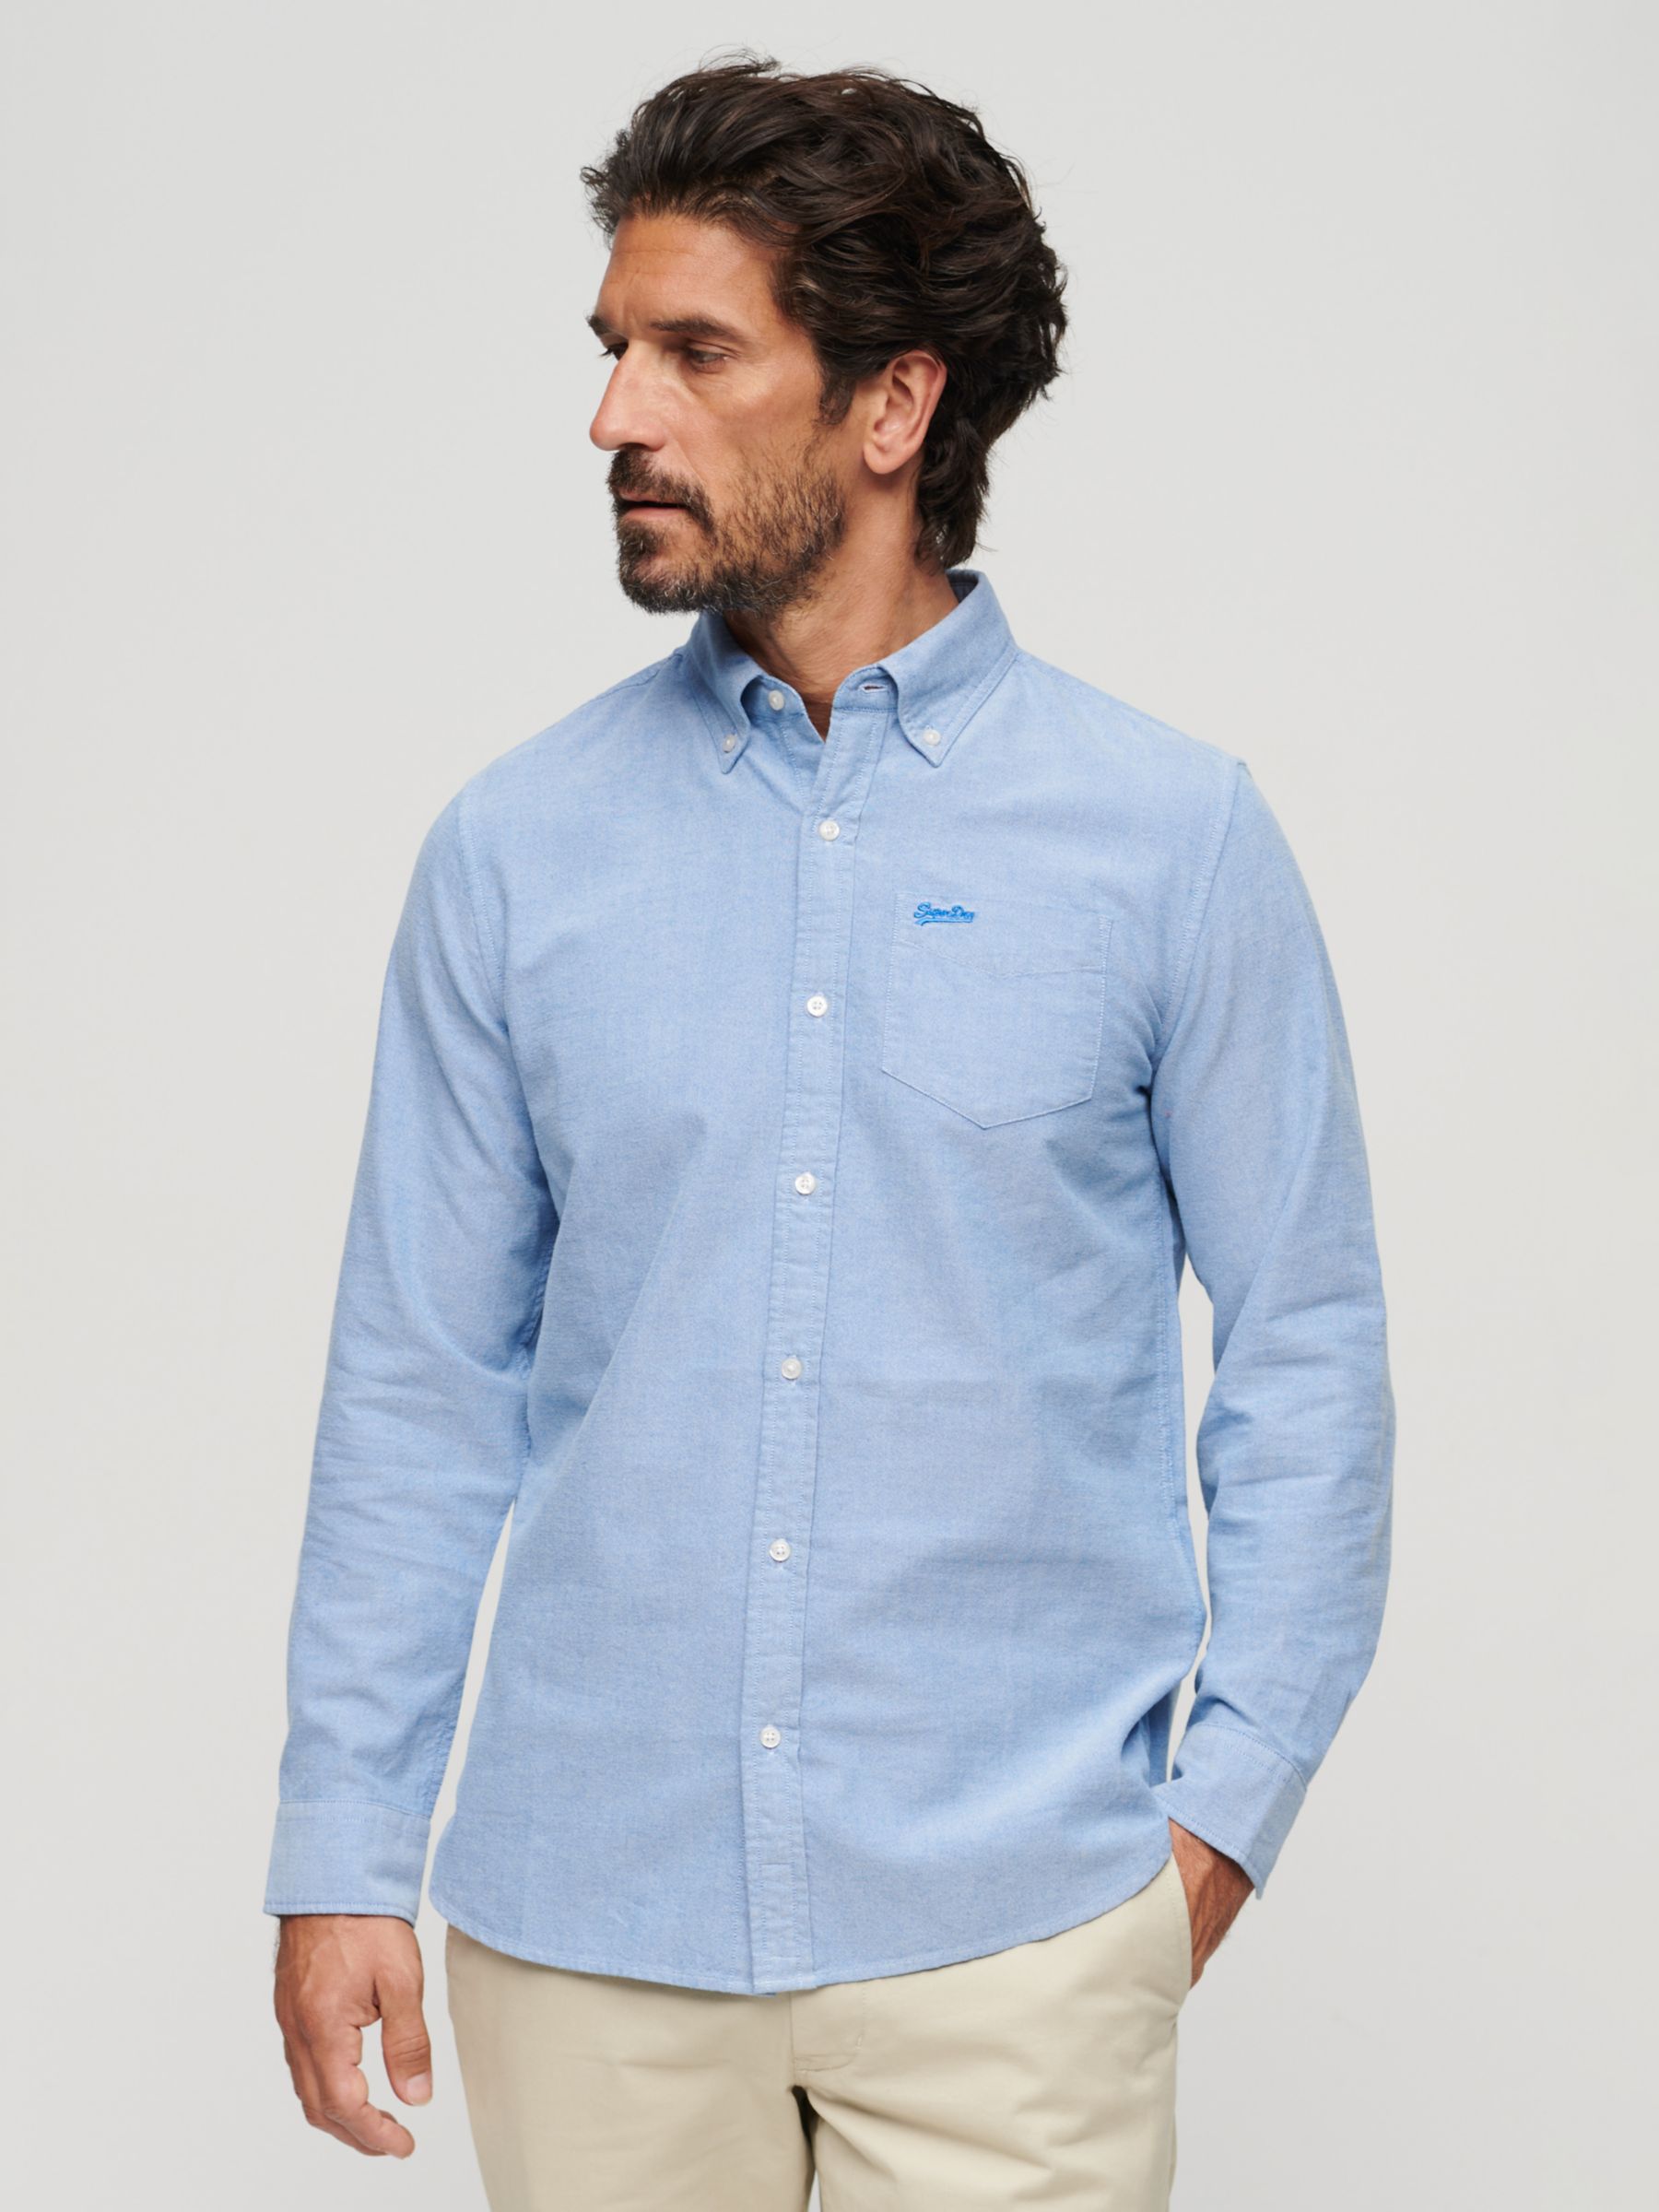 Superdry Organic Cotton Long Sleeve Oxford Shirt at John Lewis & Partners